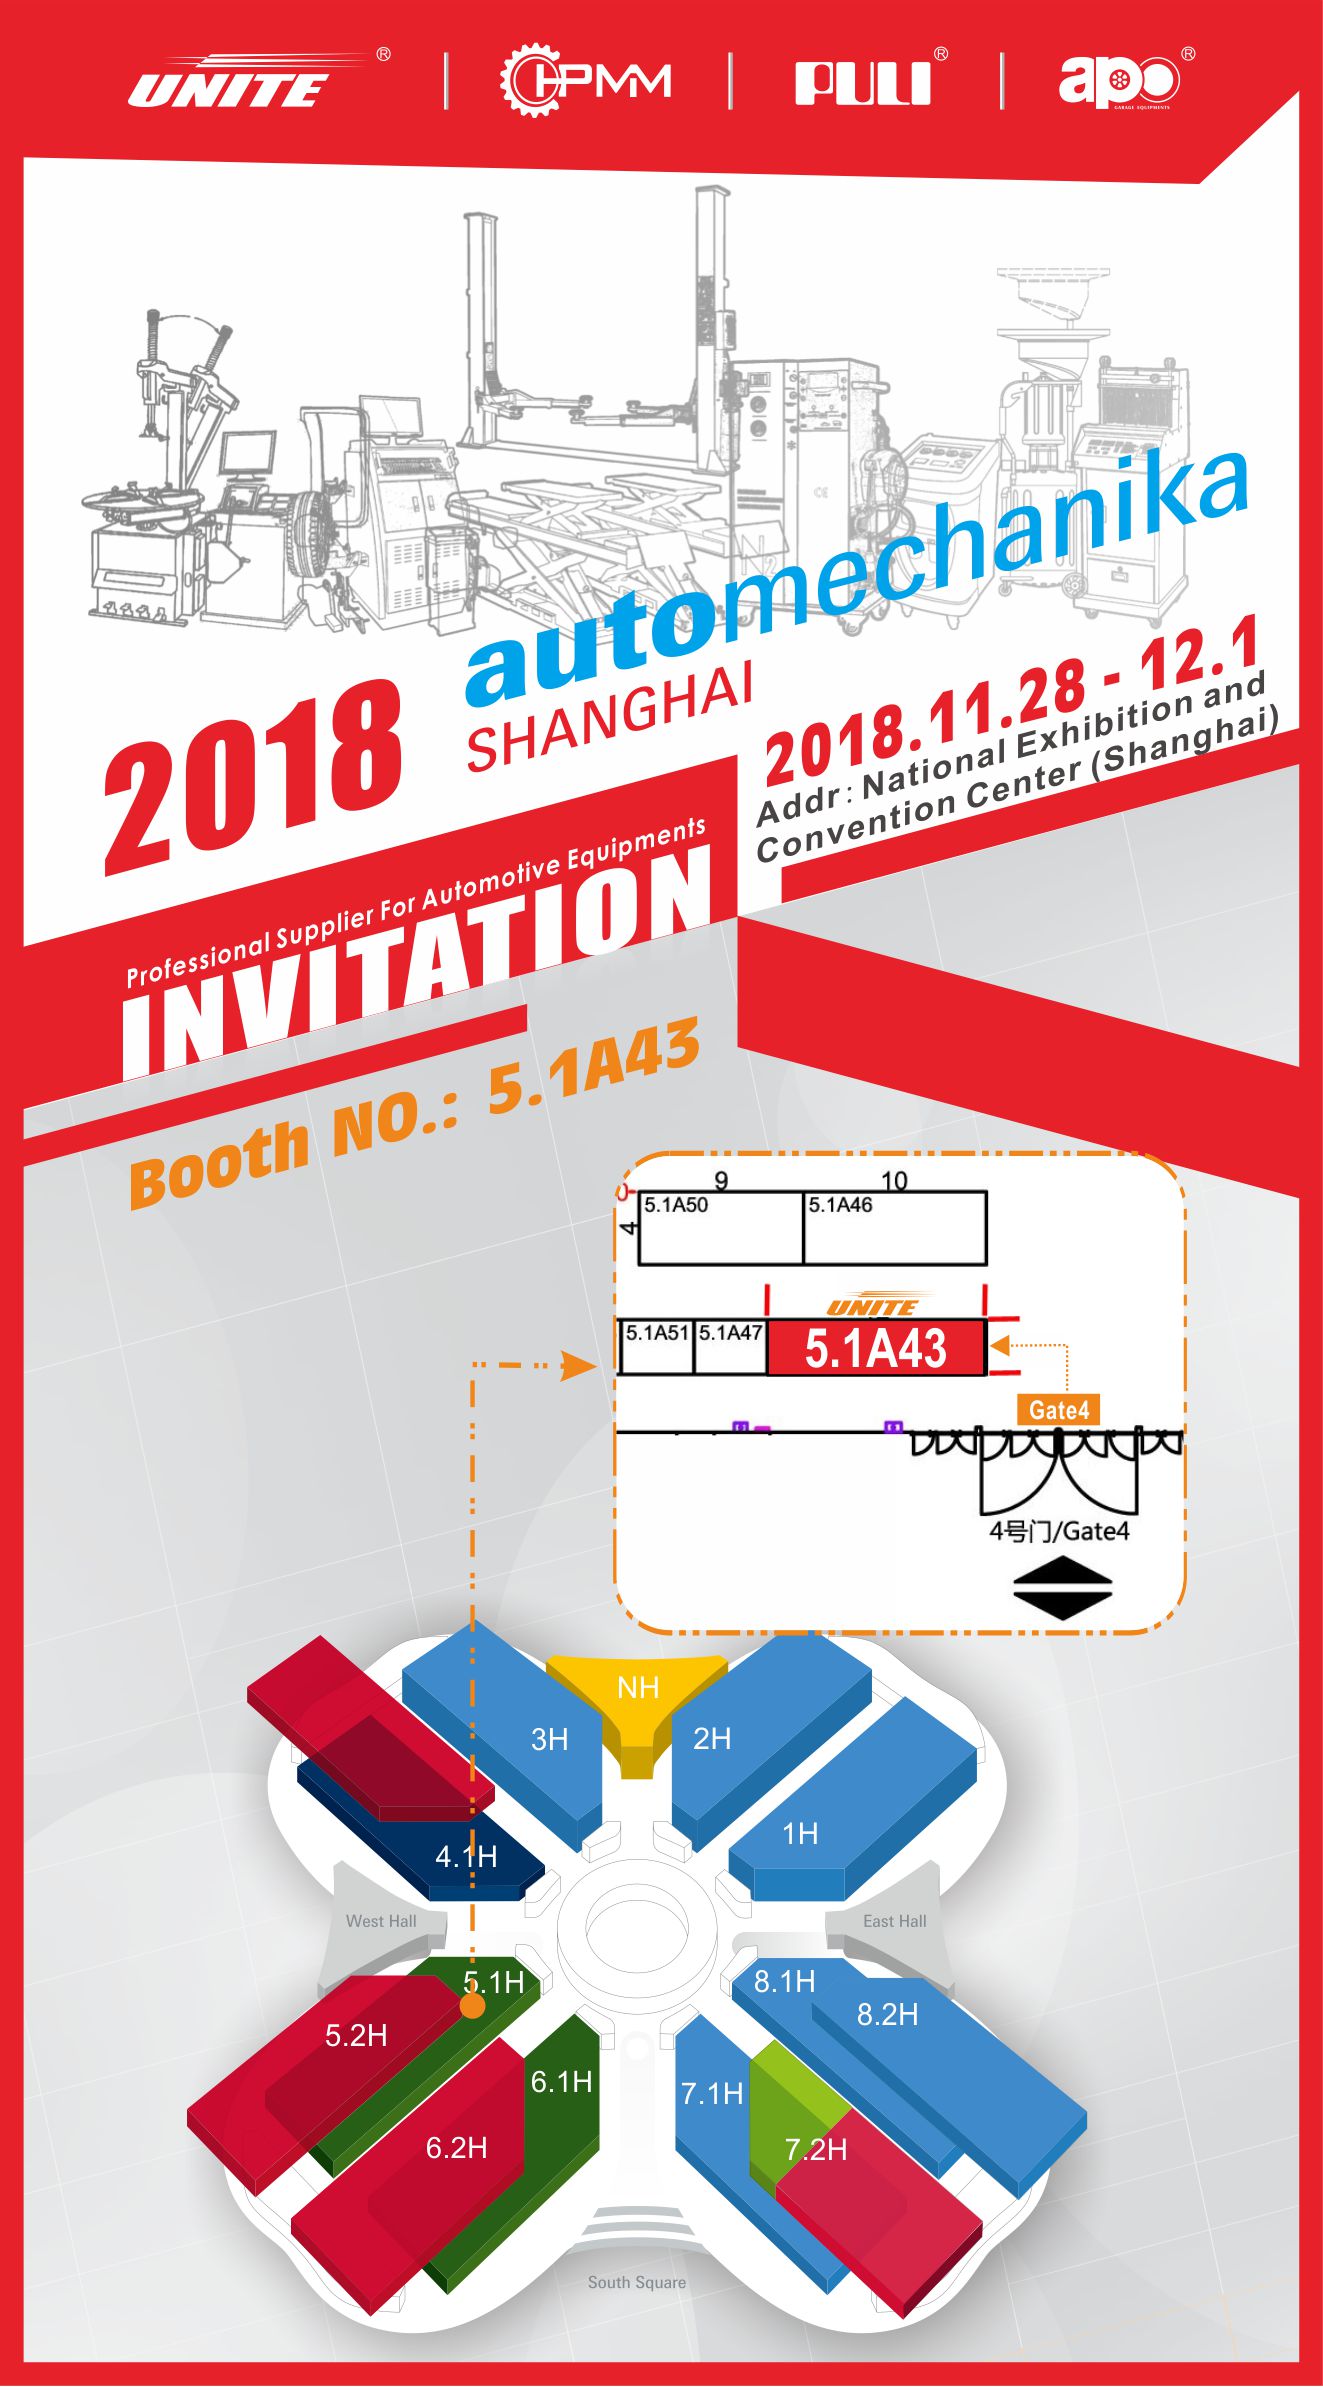 Unite Automotive 2018 AutoMeachanika Shanghai Invitation